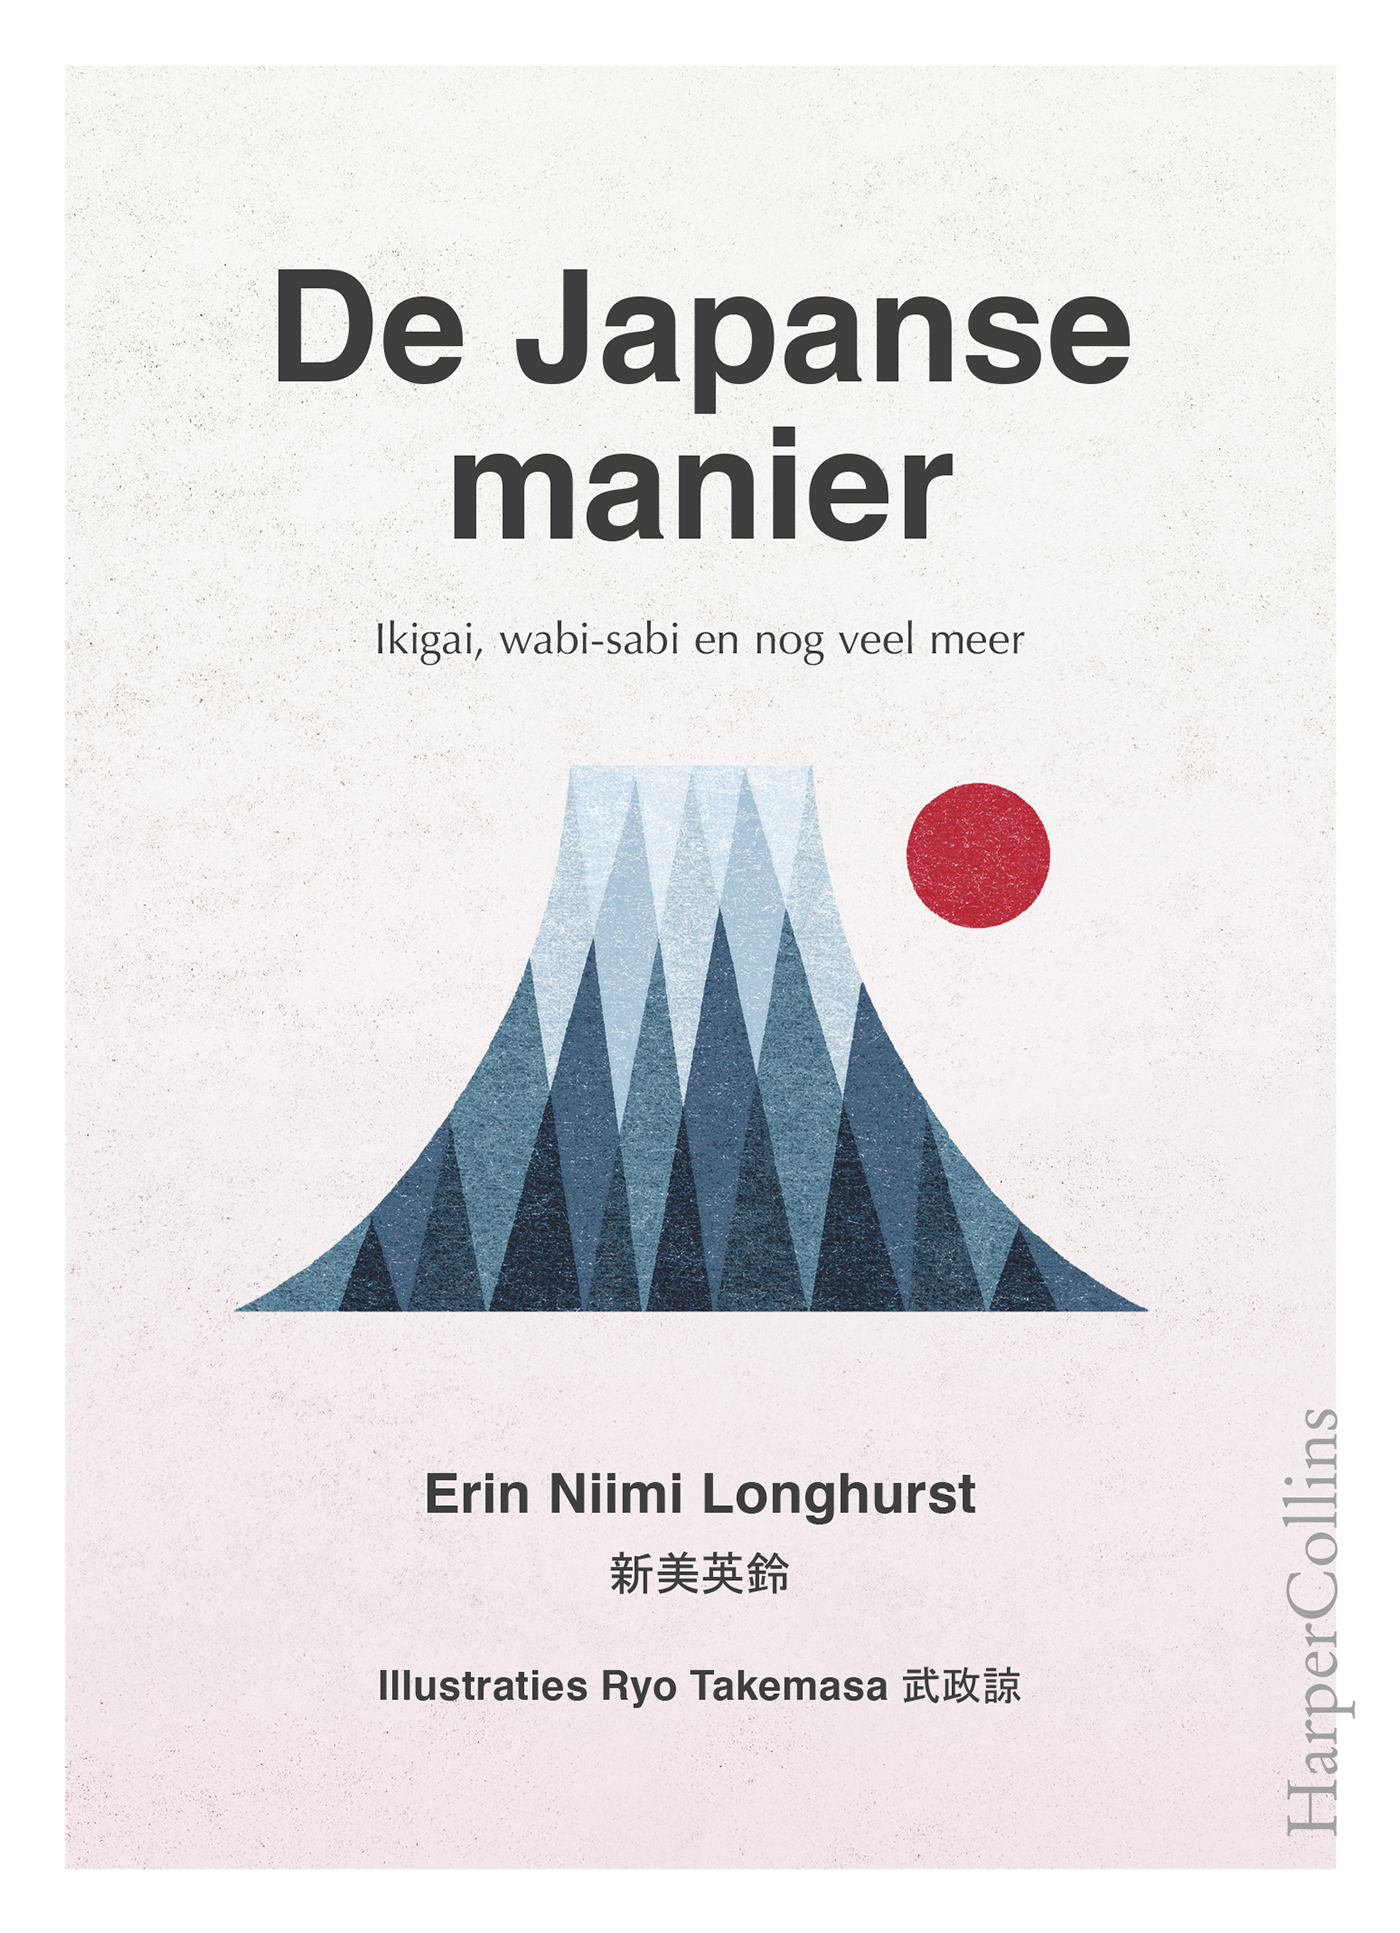 De Japanse manier (Ebook)